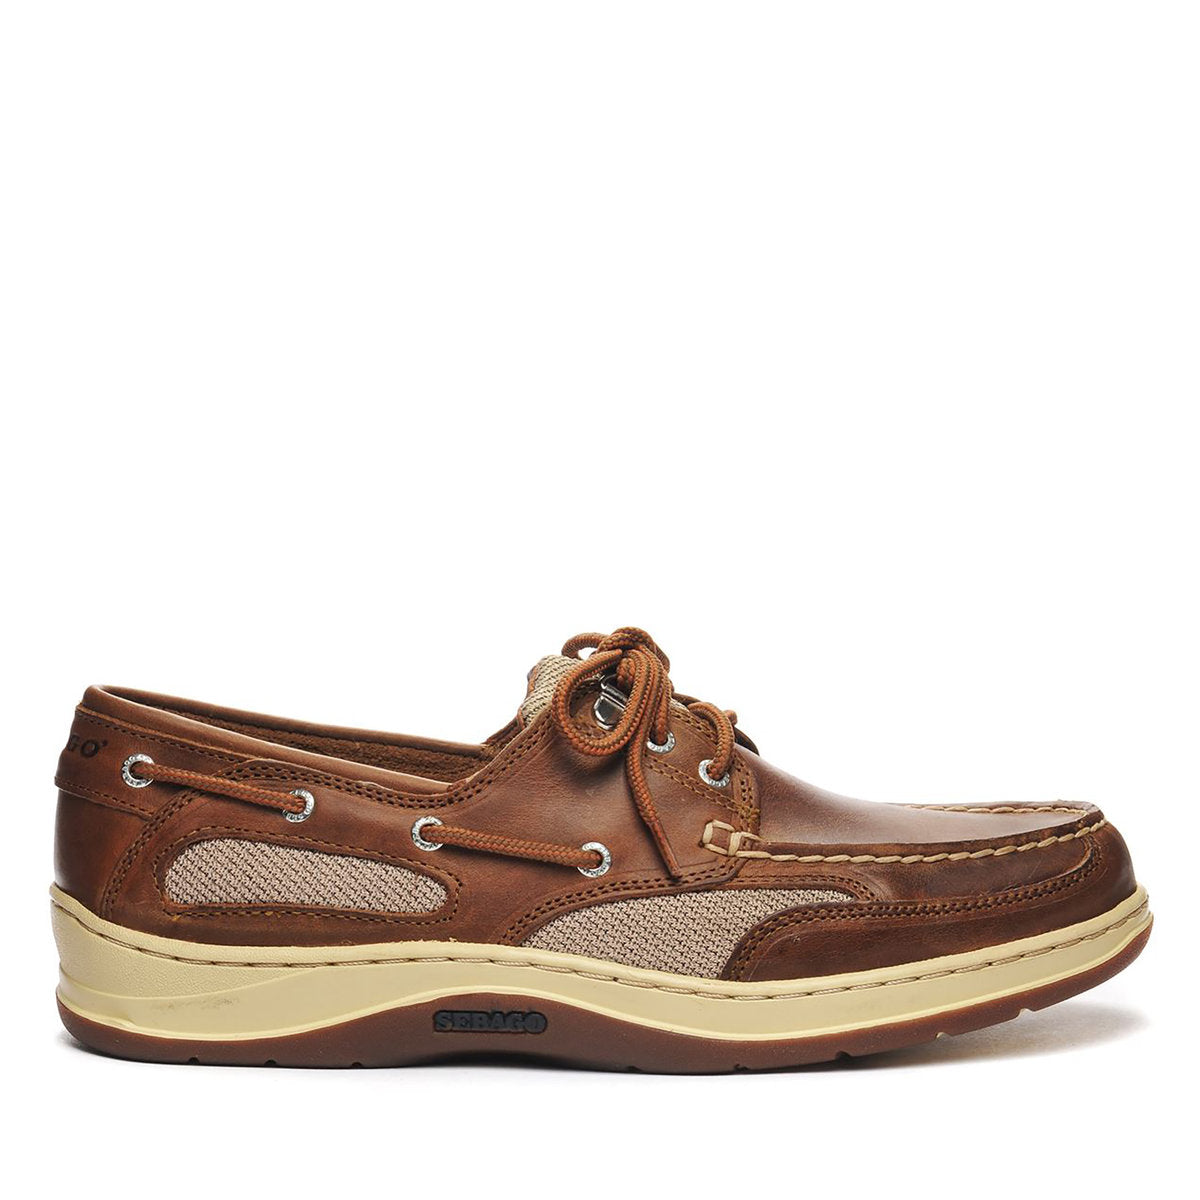 Sebago Men's 7000GEO Clovehitch II Waxed Leather Boat Shoes Brown Cinnamon